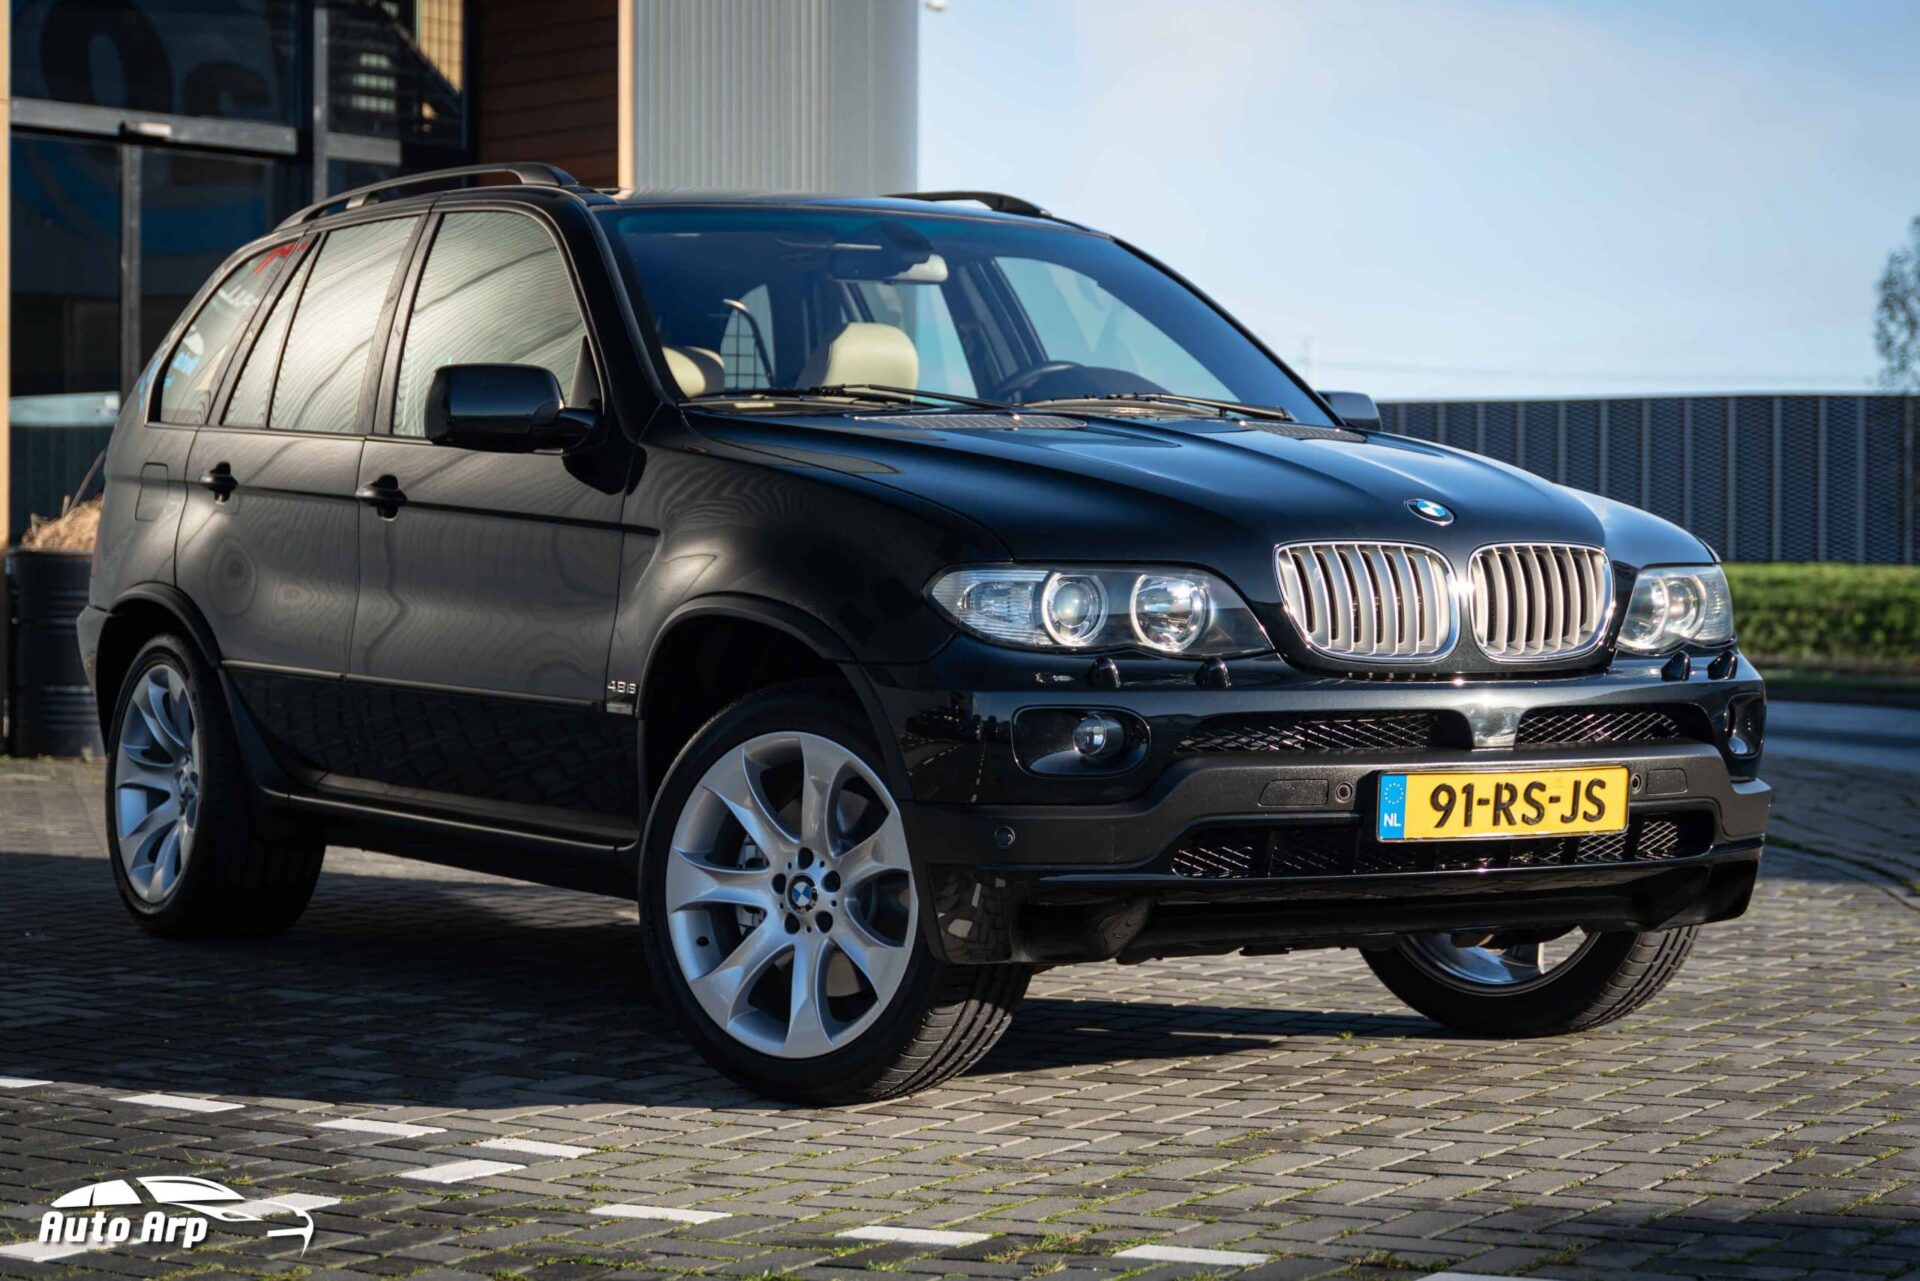 https://www.autoarp.nl/wp-content/uploads/2021/11/BMW-X5-4.8-2-van-35-scaled.jpg